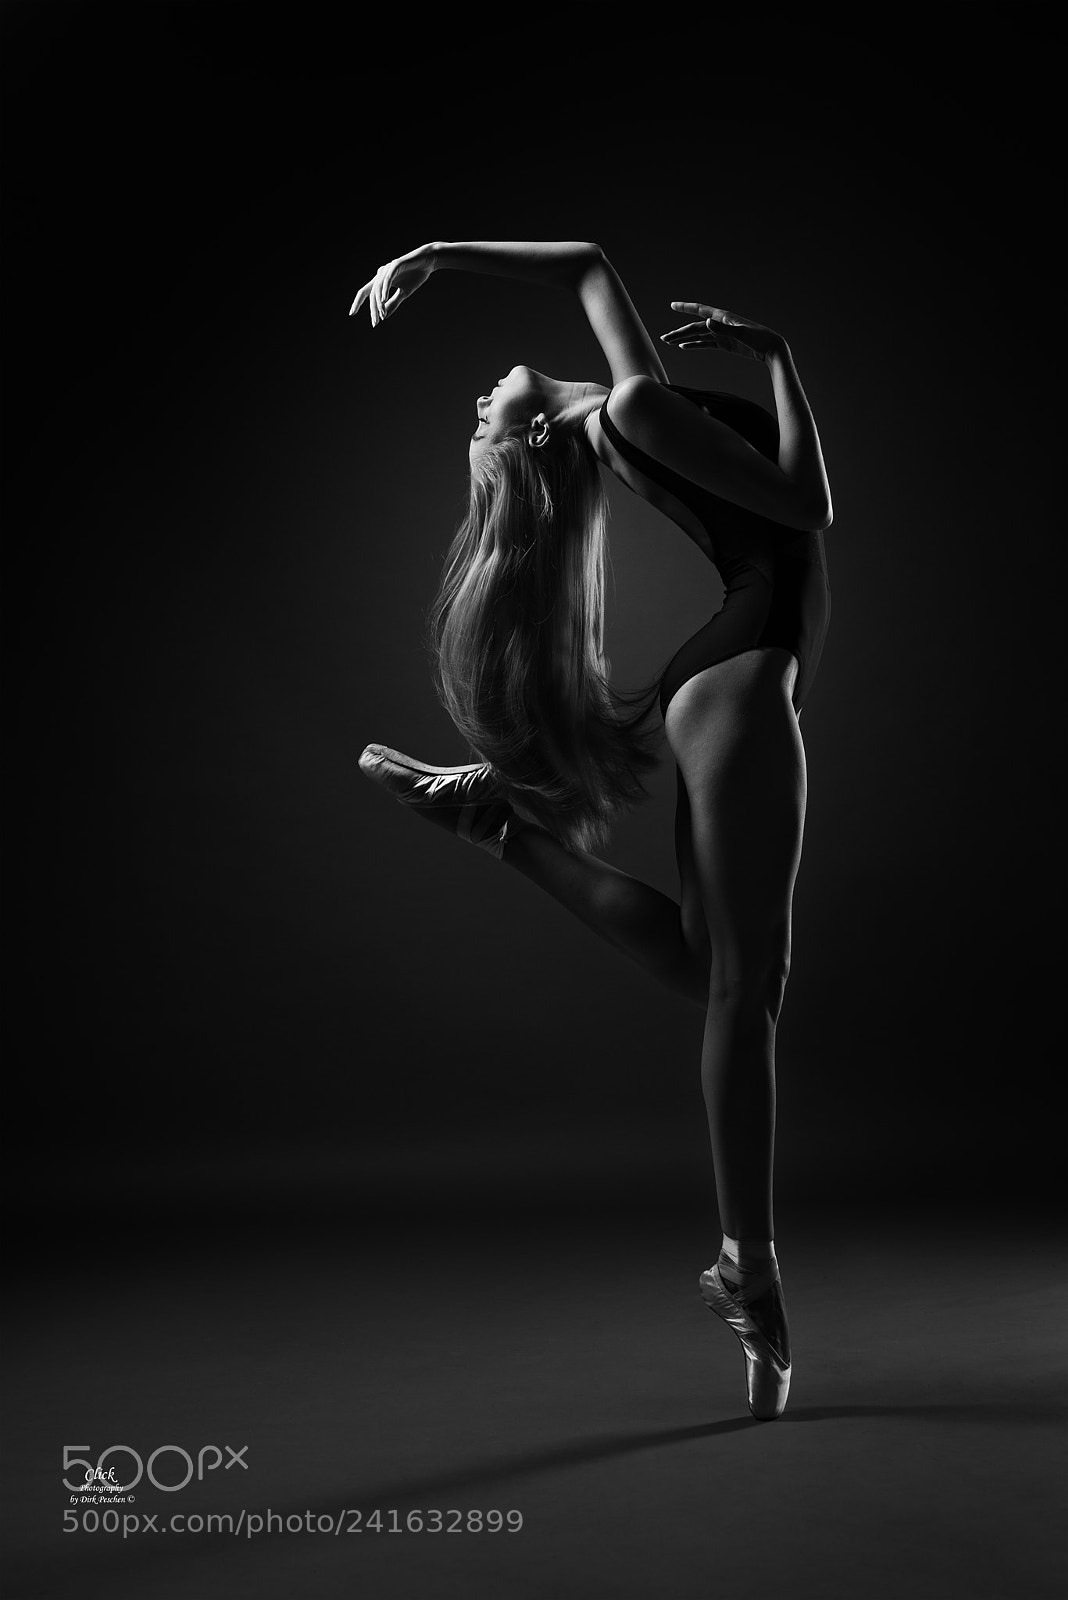 Pentax K-1 sample photo. Grace of ballet dancer photography